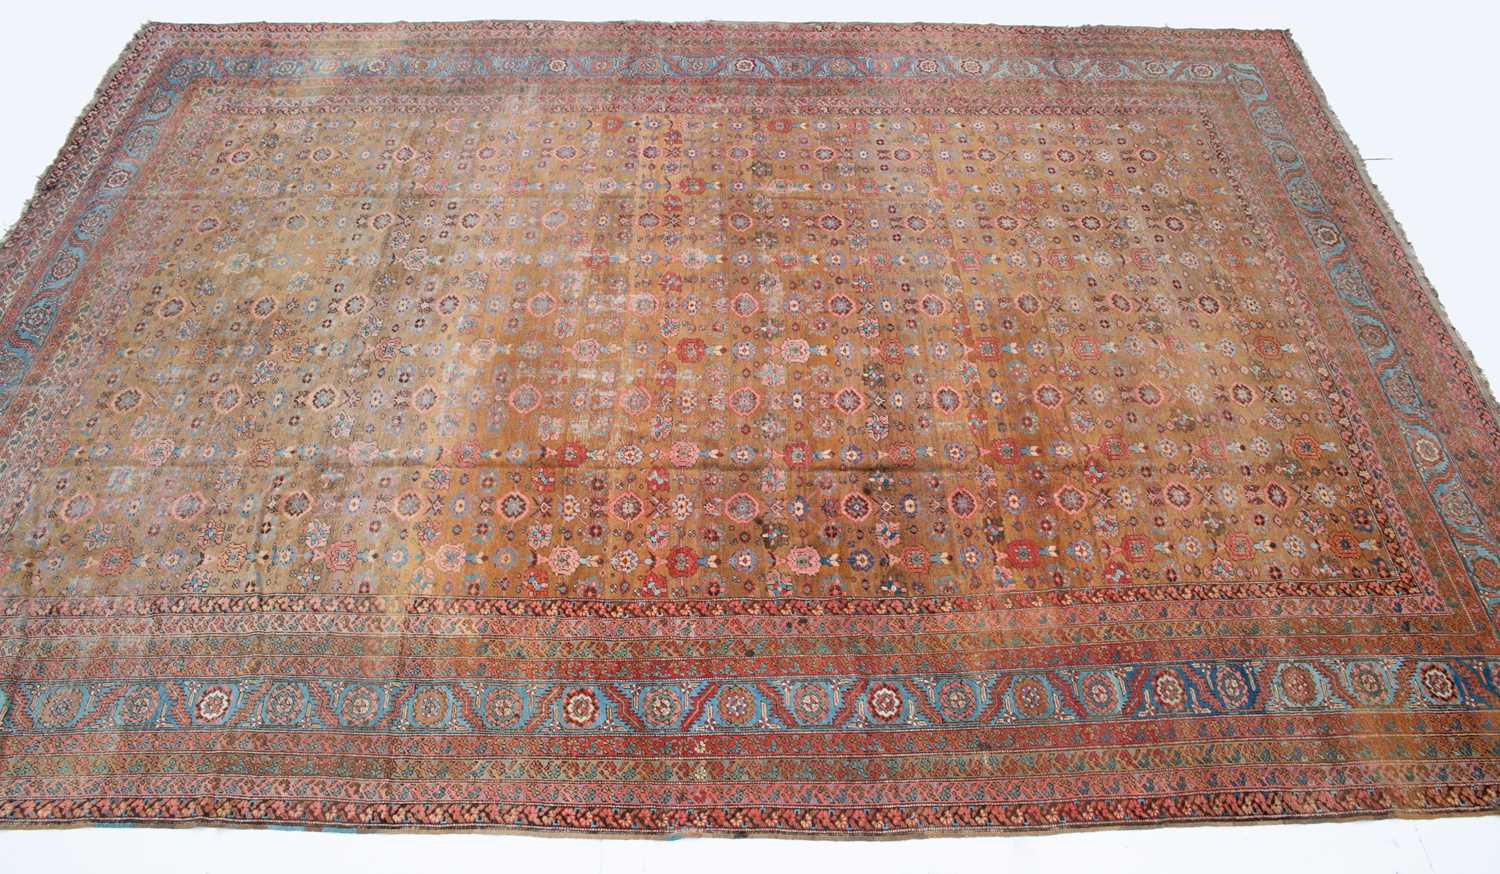 1040 - A Persian light brown ground carpet